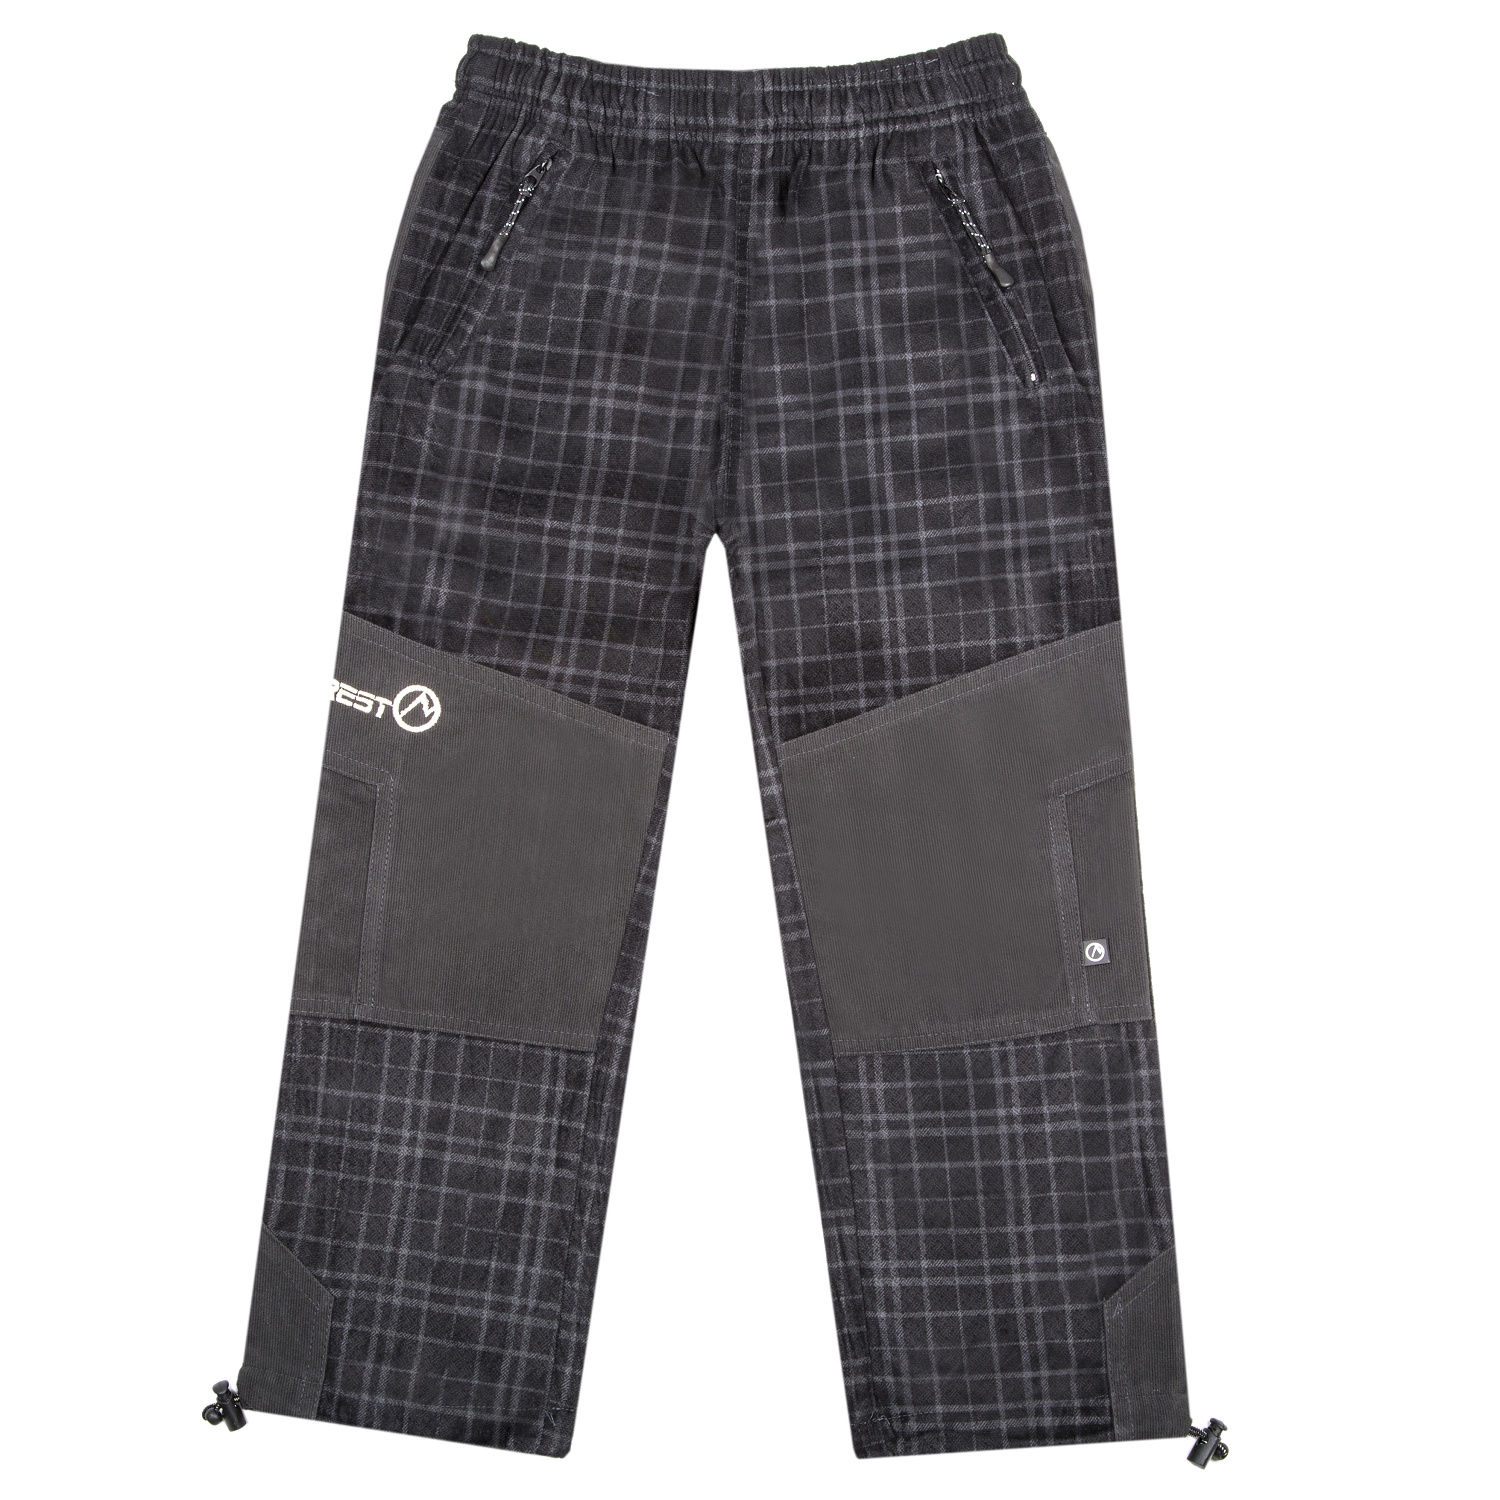 Chlapecké outdoorové kalhoty - NEVEREST F-922cc, šedá Barva: Šedá, Velikost: 98